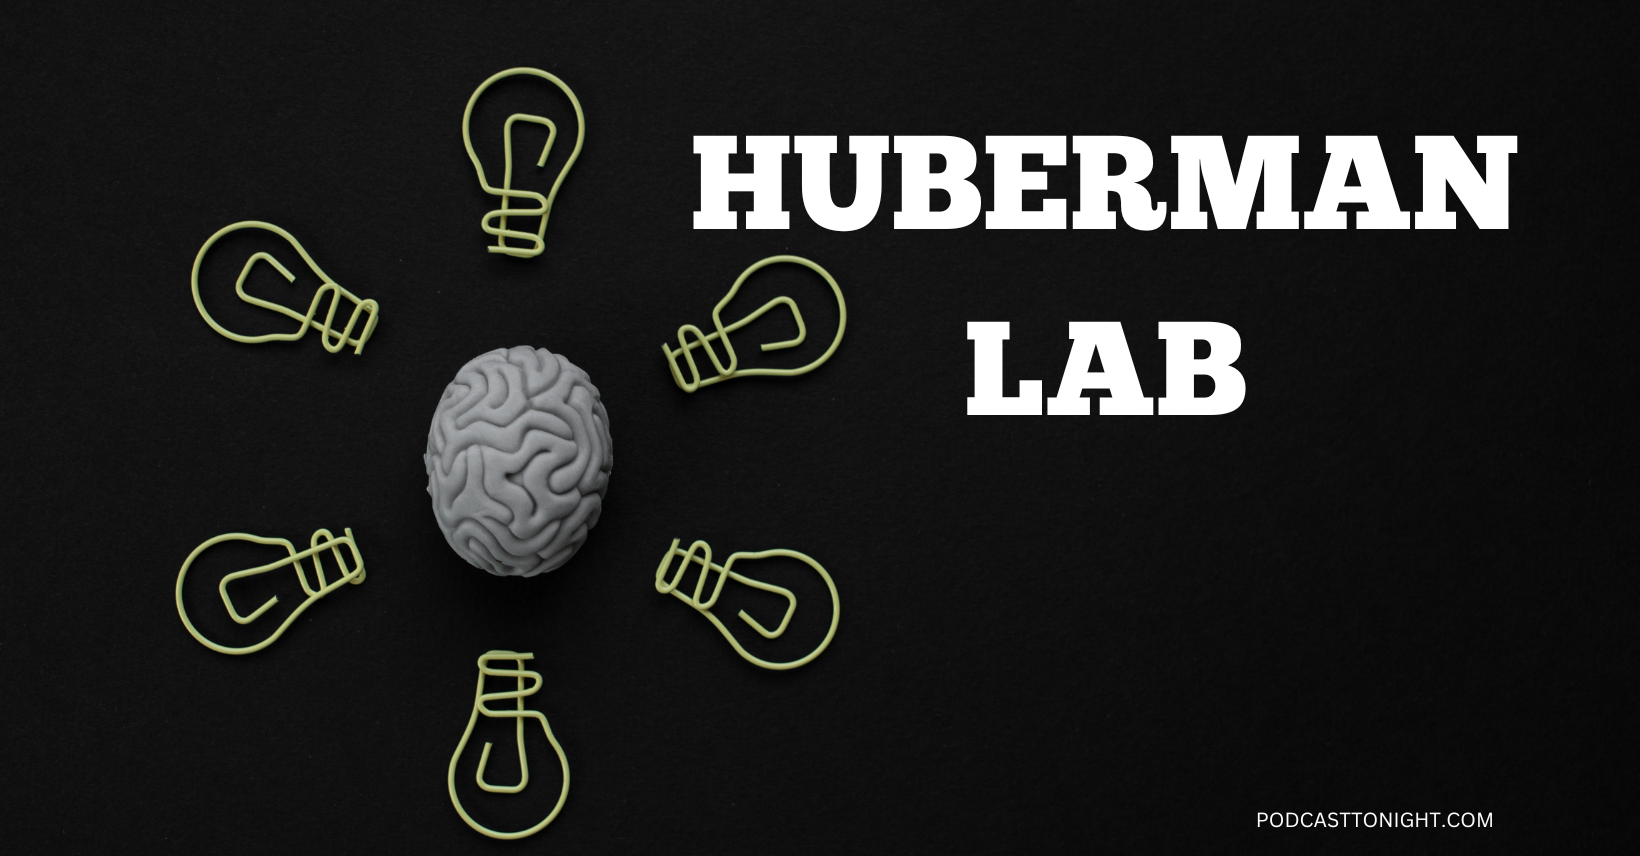 Huberman Lab Podcast – Listen Here